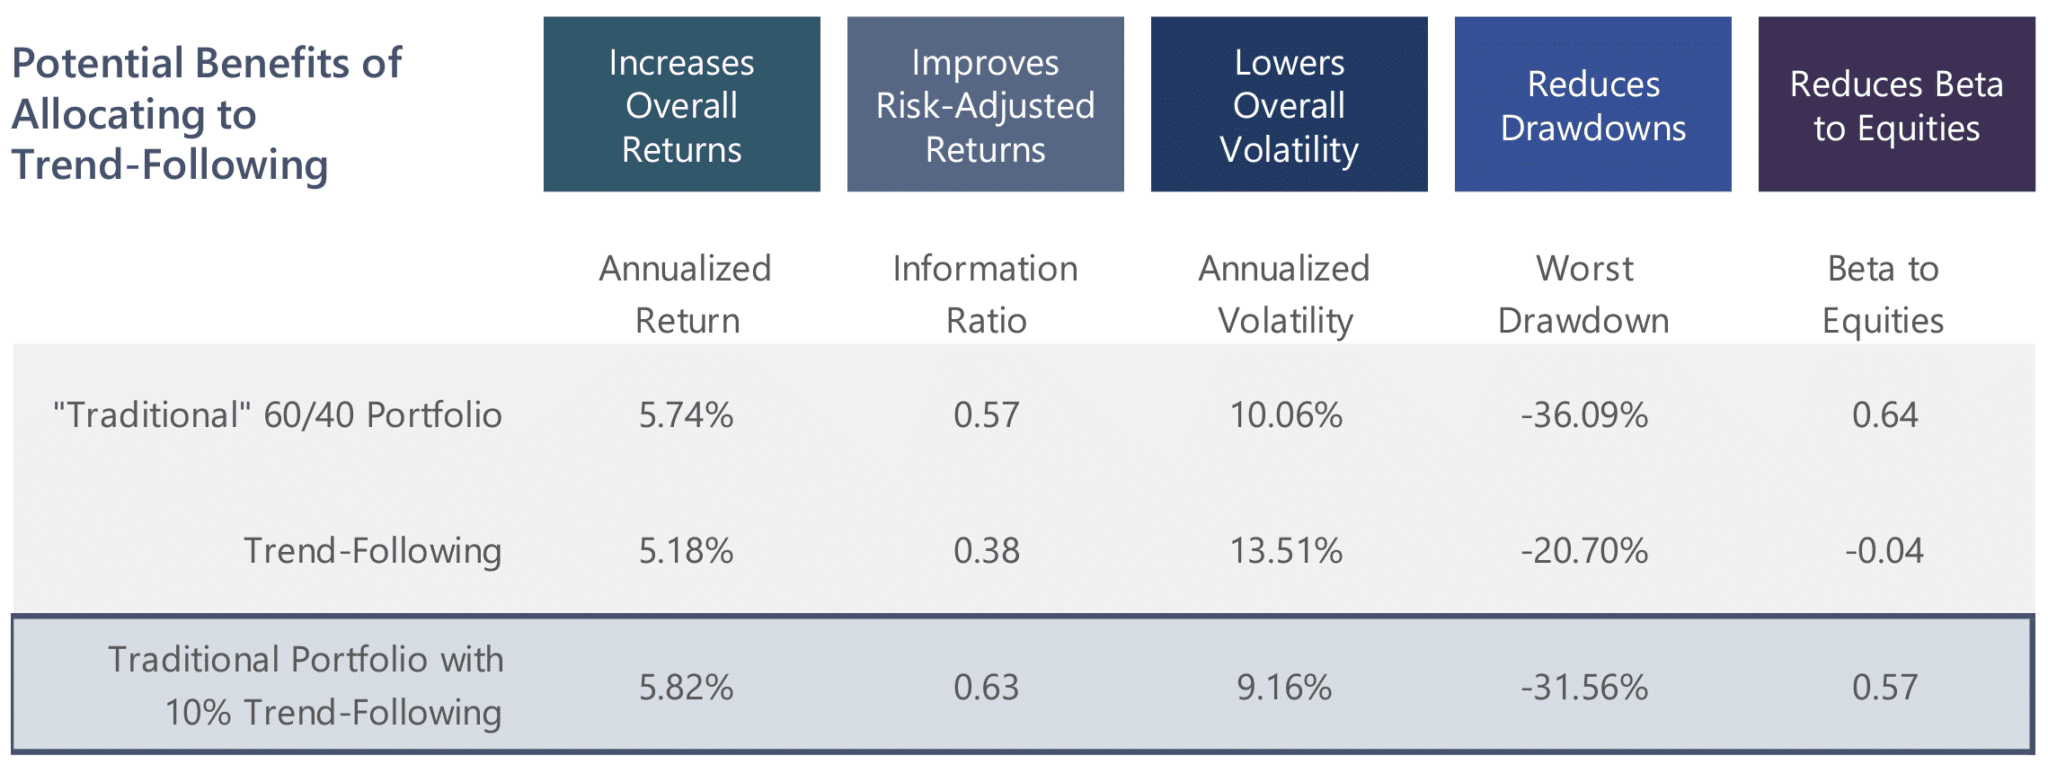 Adding trend-following to a 60/40 portfolio impact on returns, volatility, drawdowns